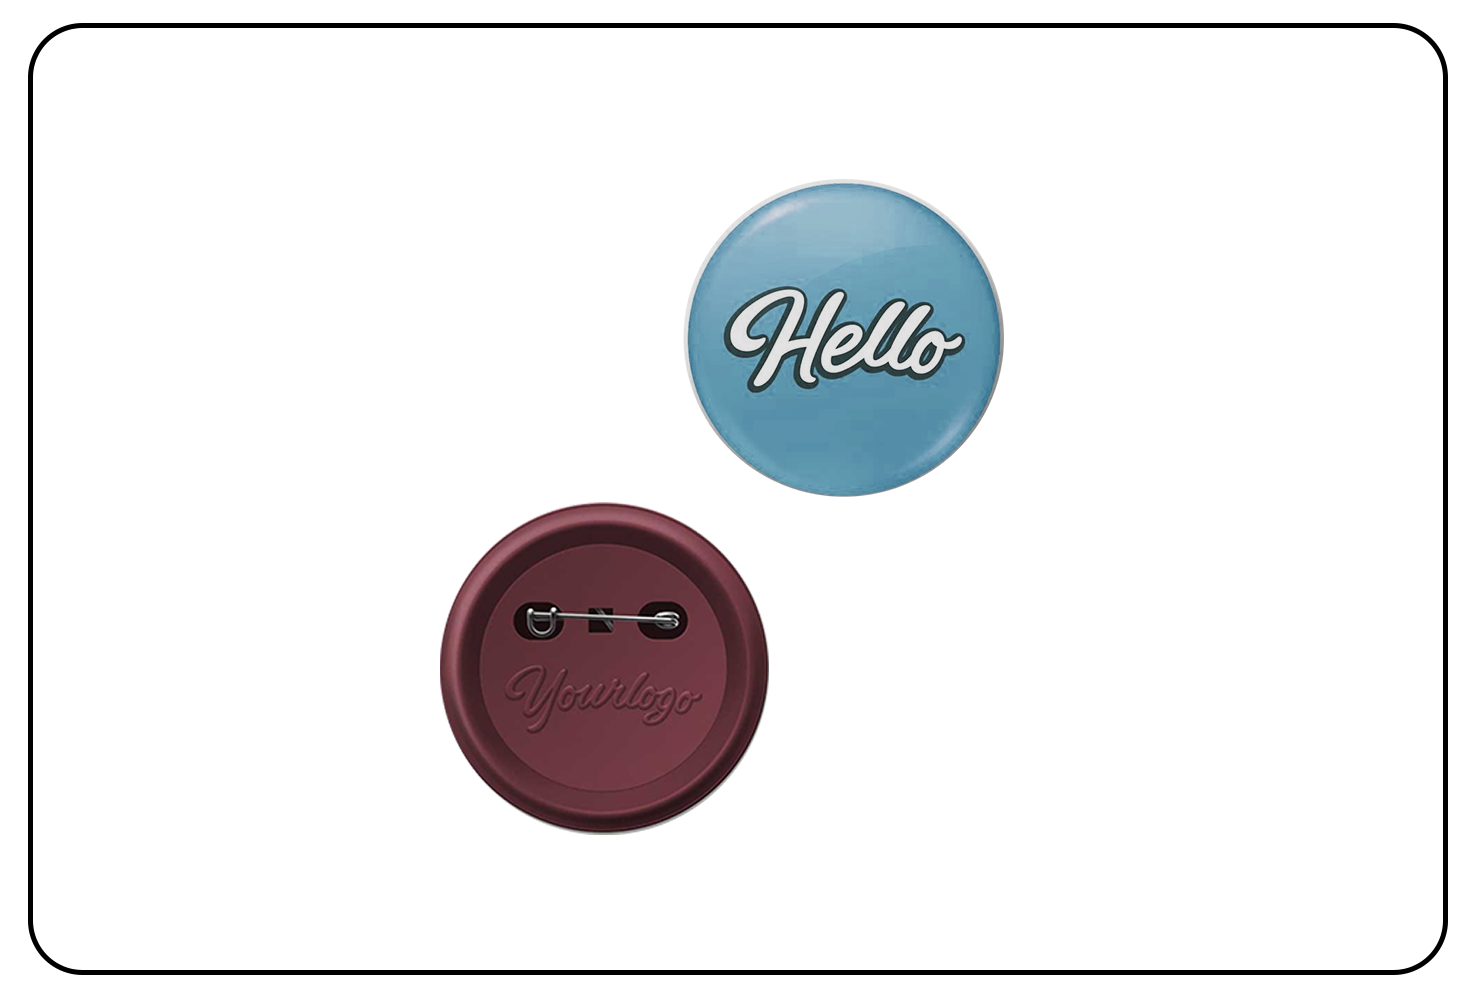 Custom button pin for expressive accessories.